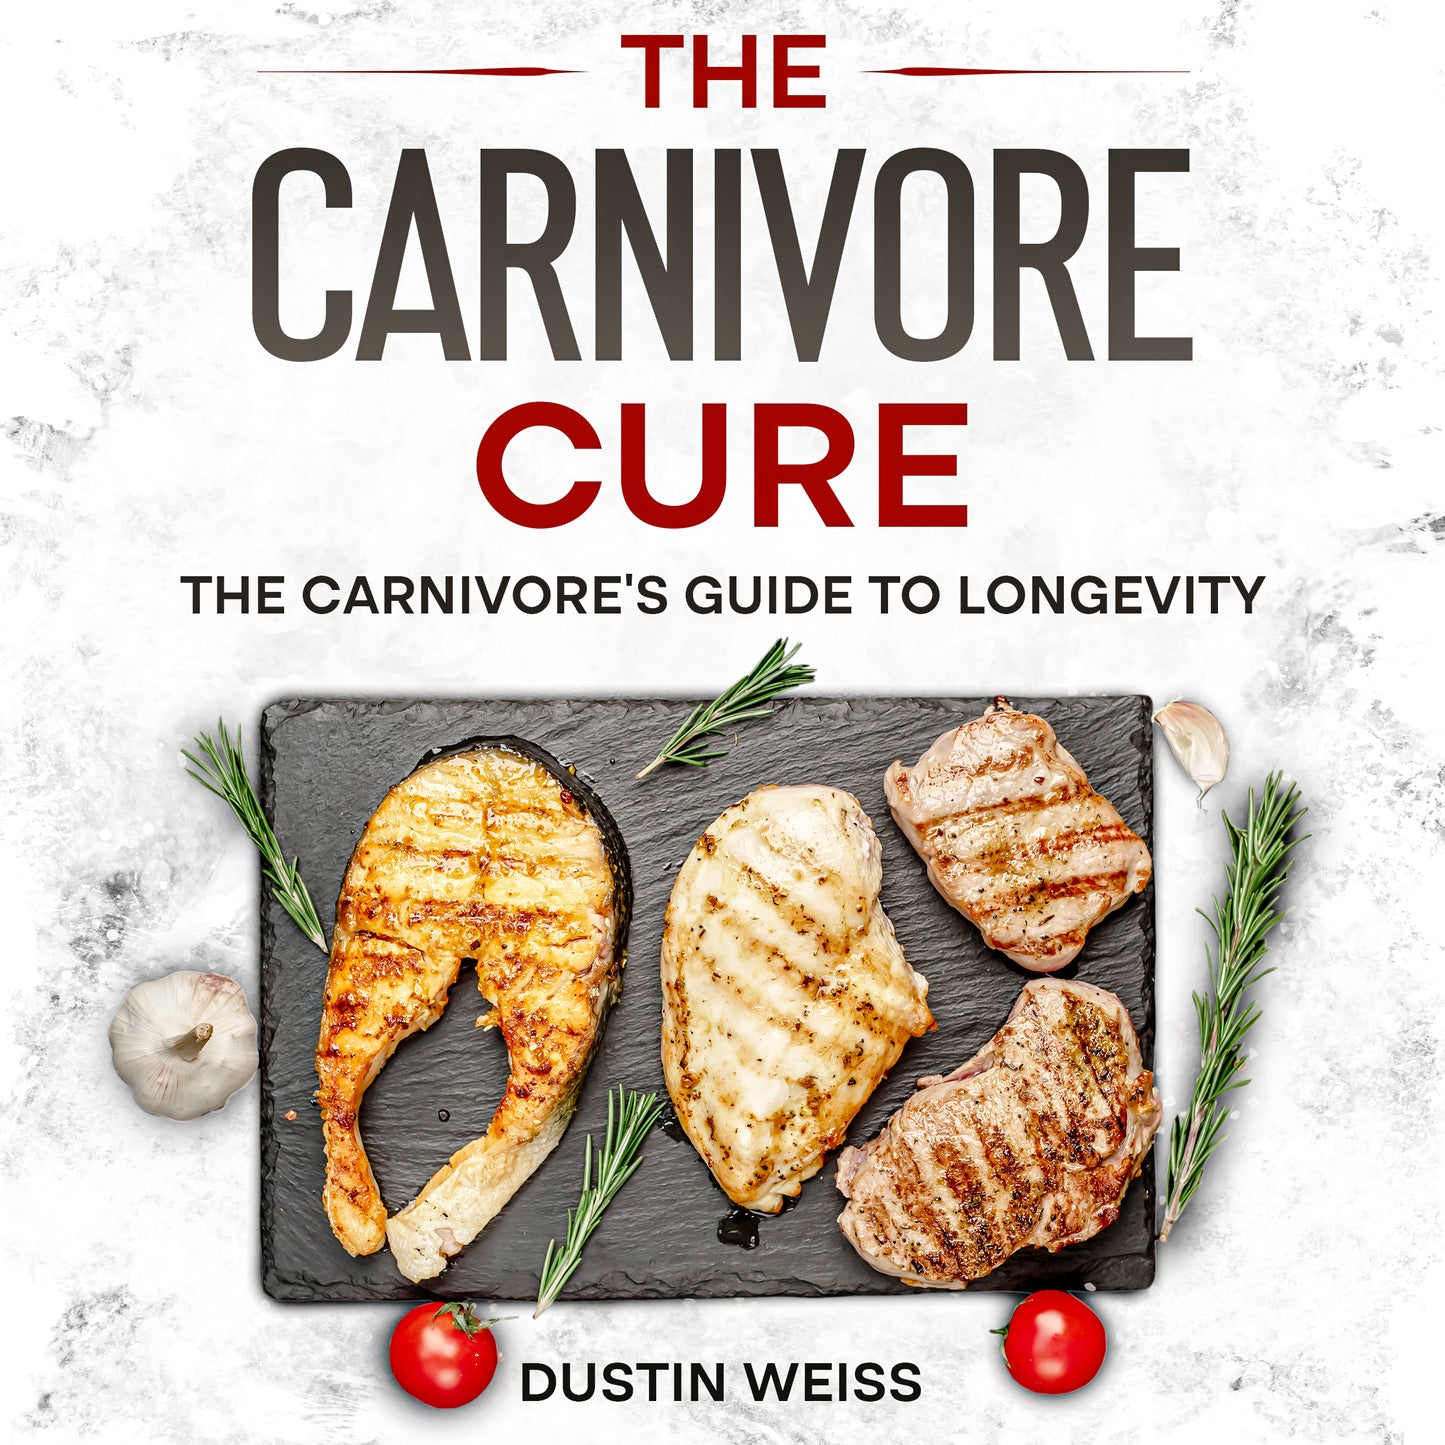 The Carnivore Cure